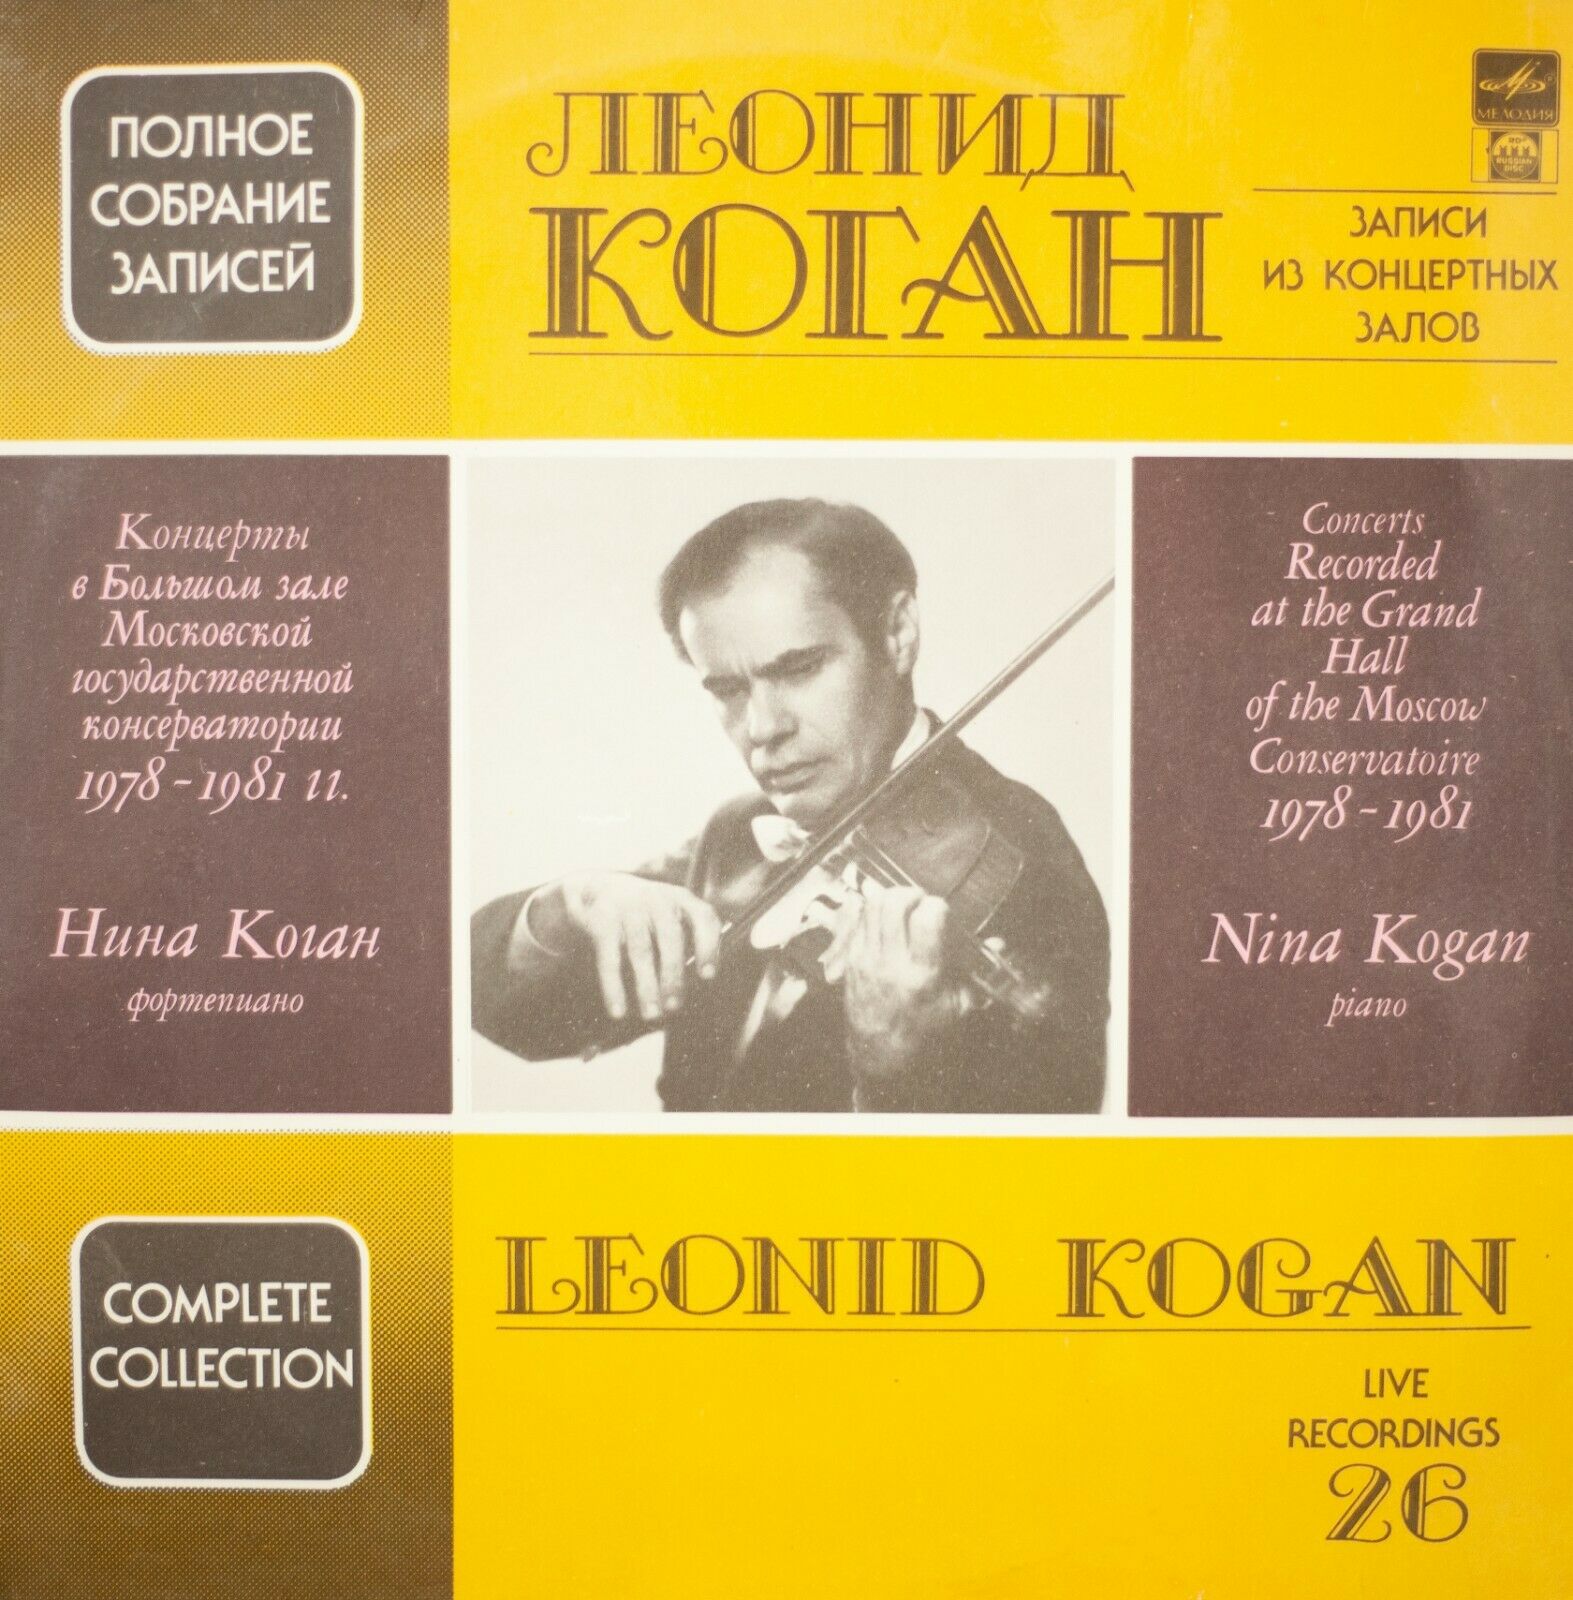 popsike.com - LEONID KOGAN violin COMPLETE COLL.26 “CONCERTS“ NINA KOGAN  piano 2LP - auction details